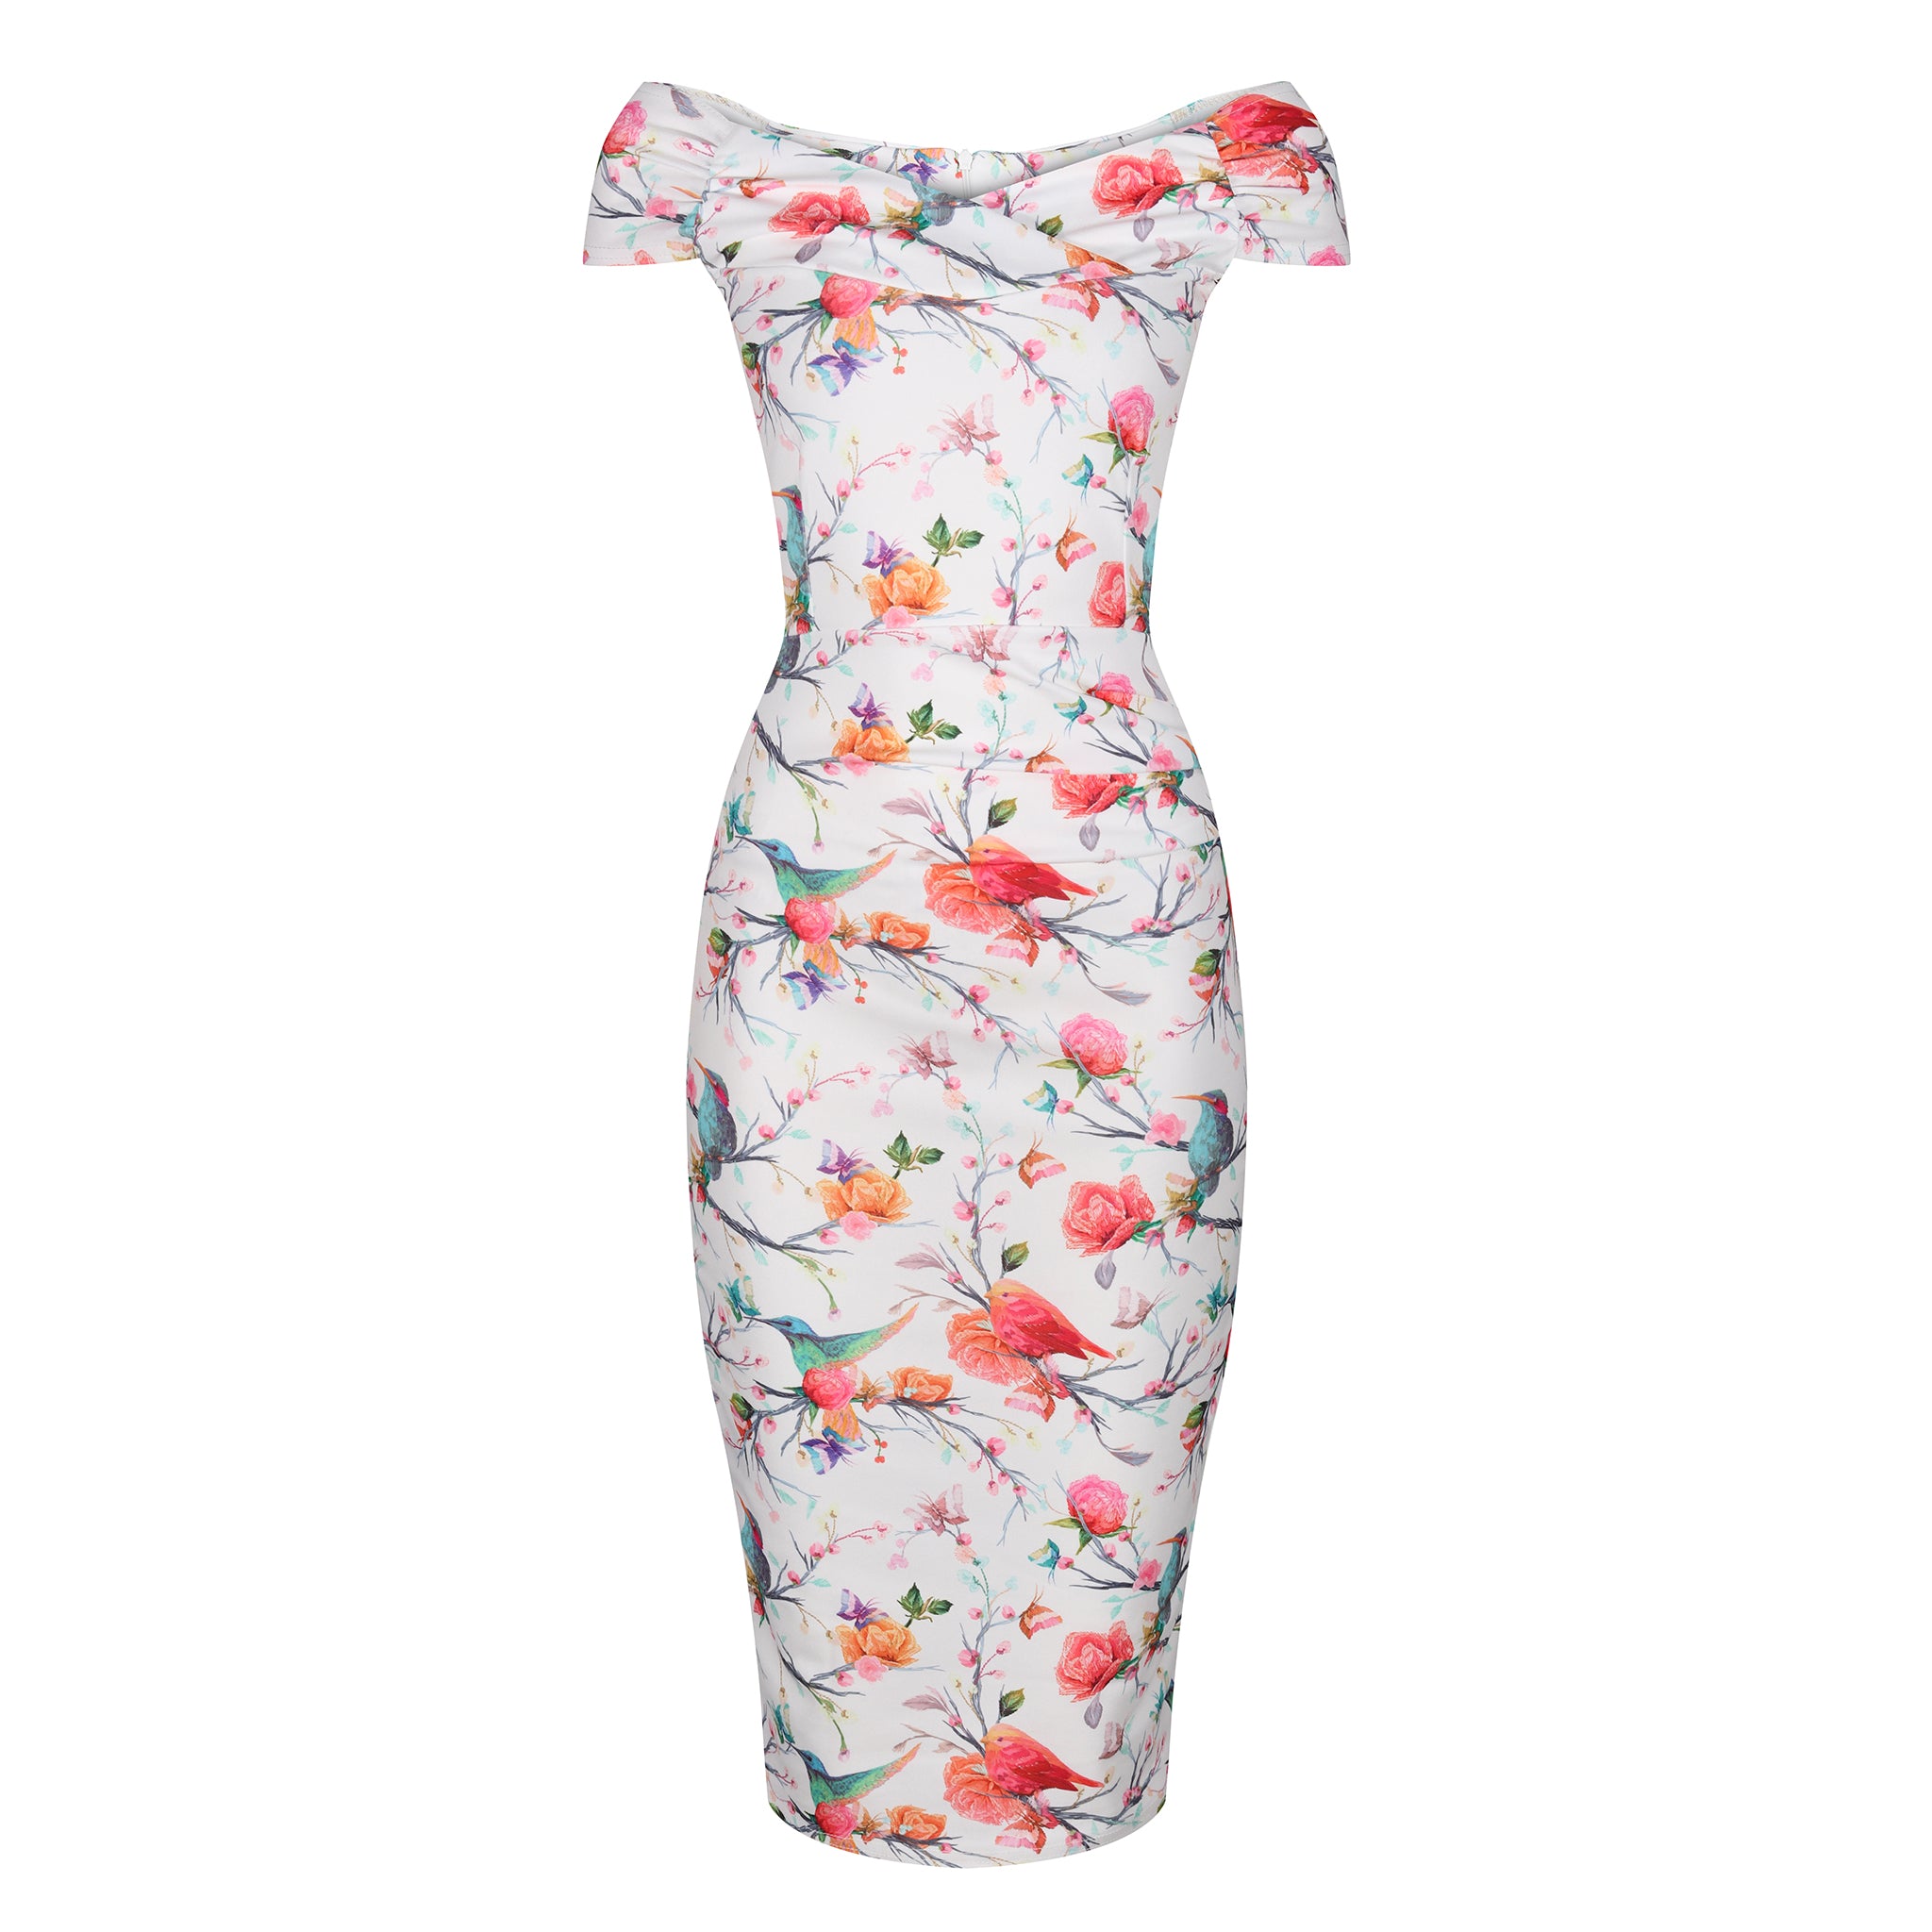 White Summer Bird Butterfly Print Cap Sleeve Crossover Top Bardot Wiggle Dress